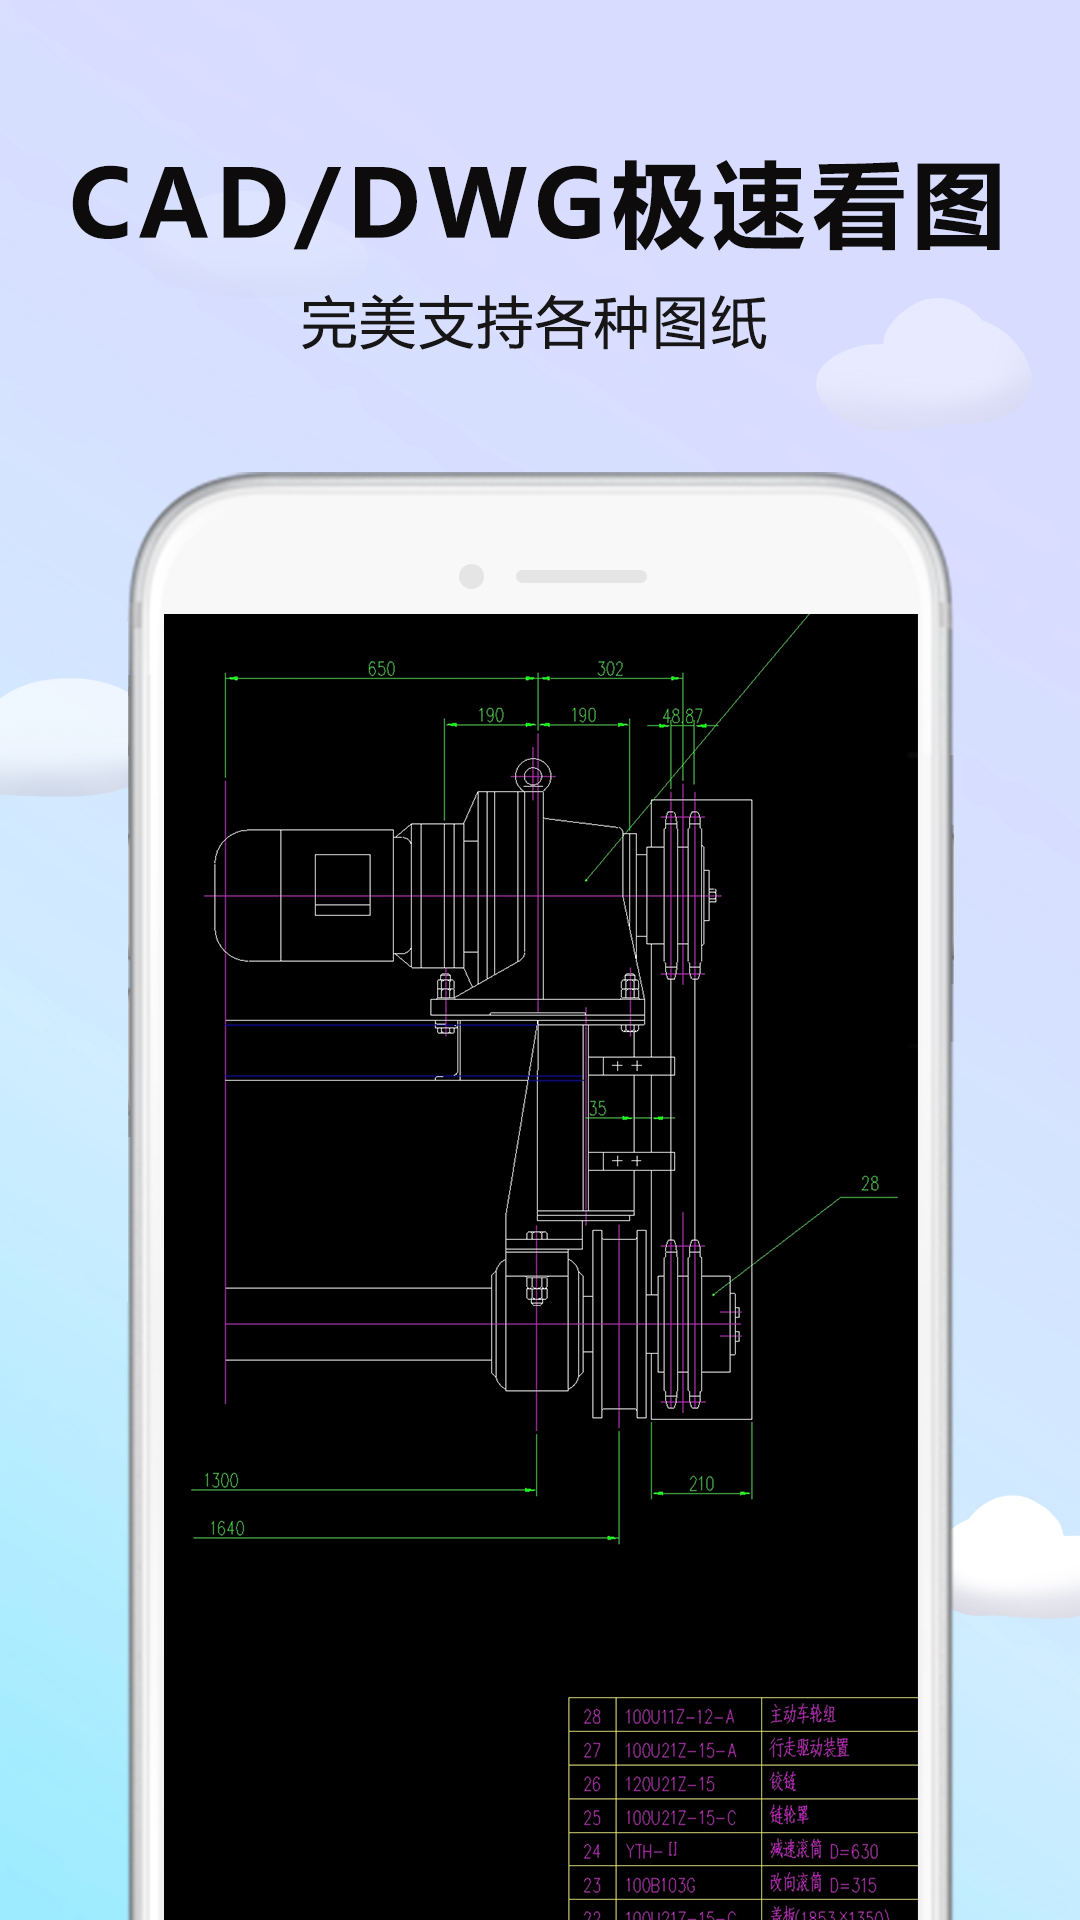 CAD看图器 V1.0 安卓版